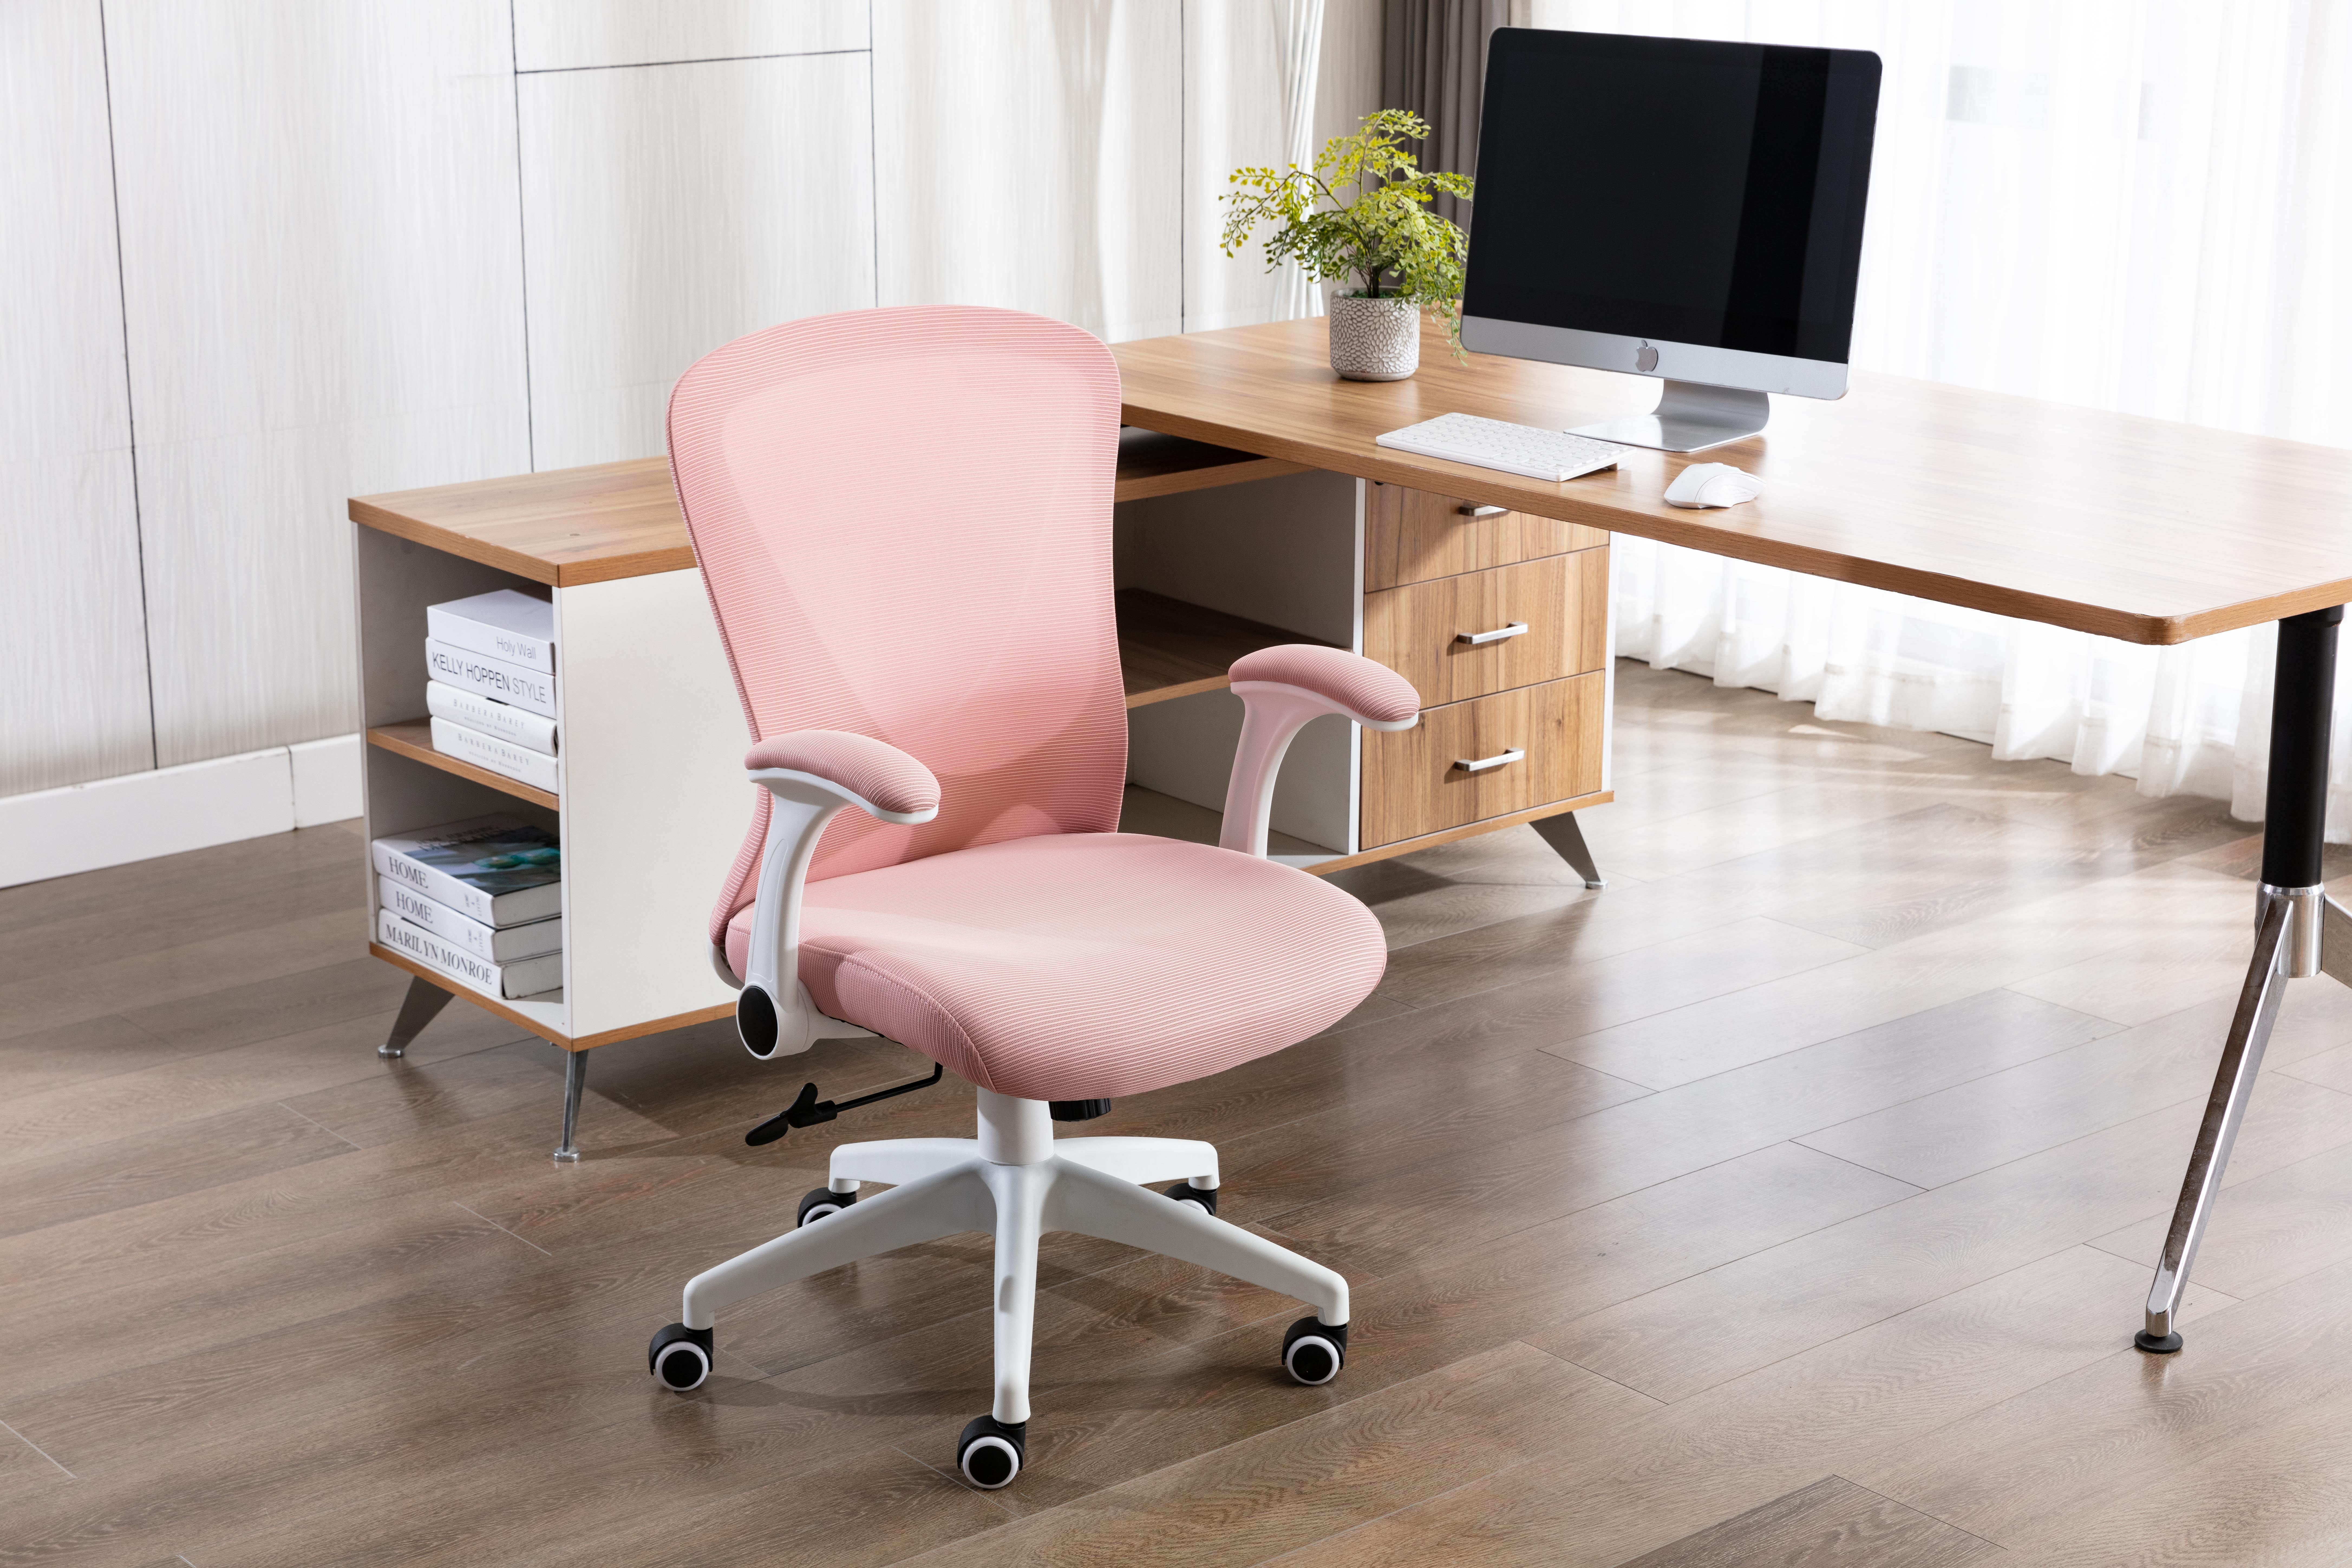 Details about   Mesh Office Chair Ergonomic Mid Back Swivel Computer Desk Seat Task Adjustable 